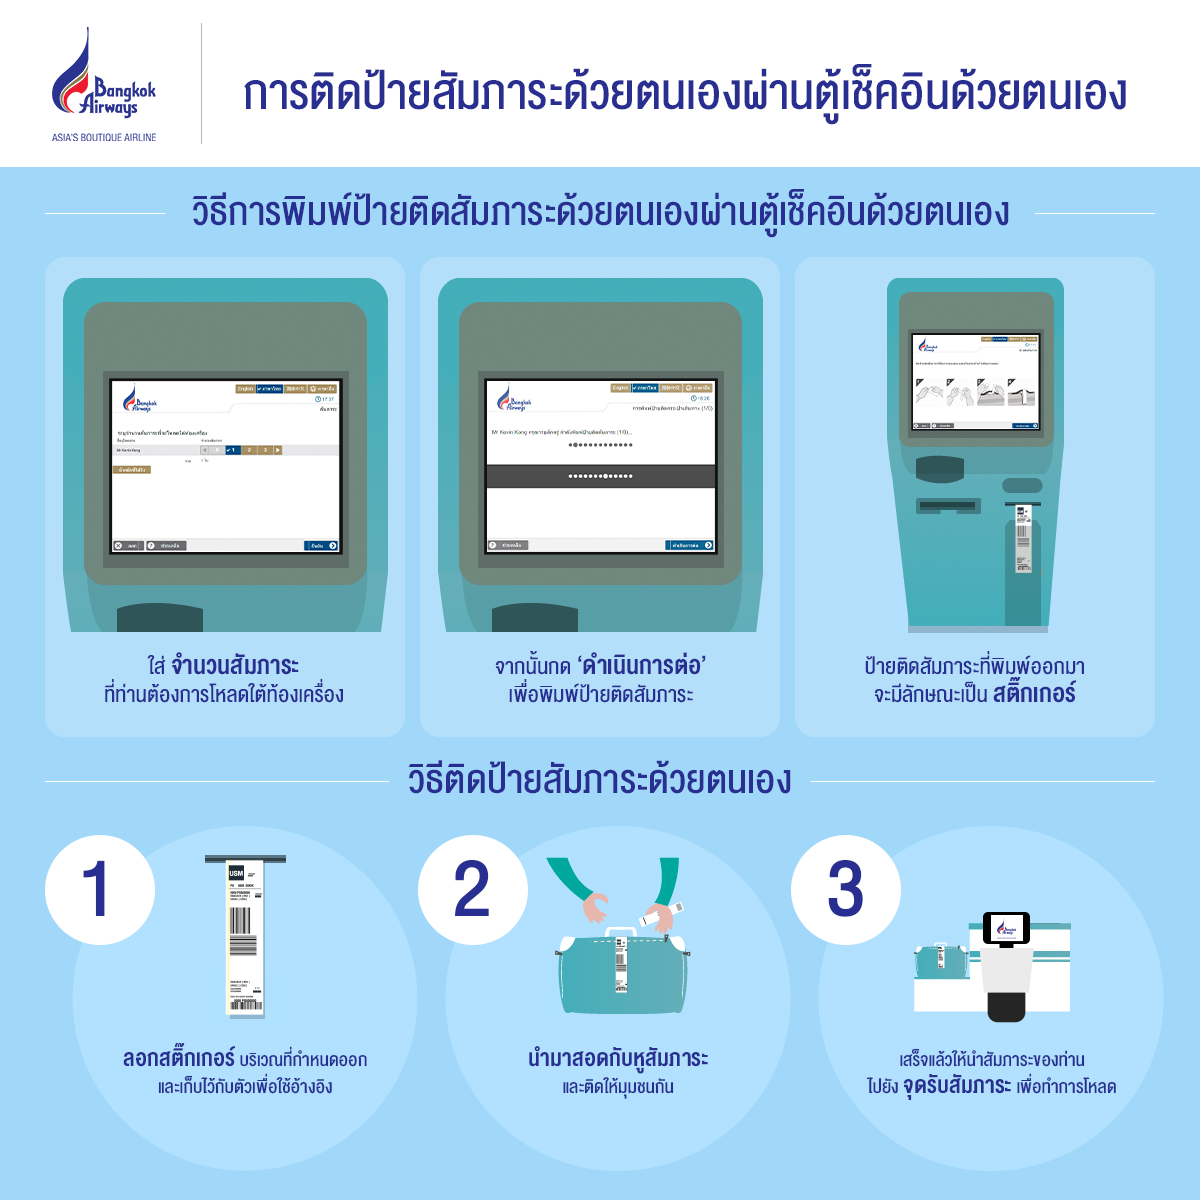 Bangkok airways online check-in